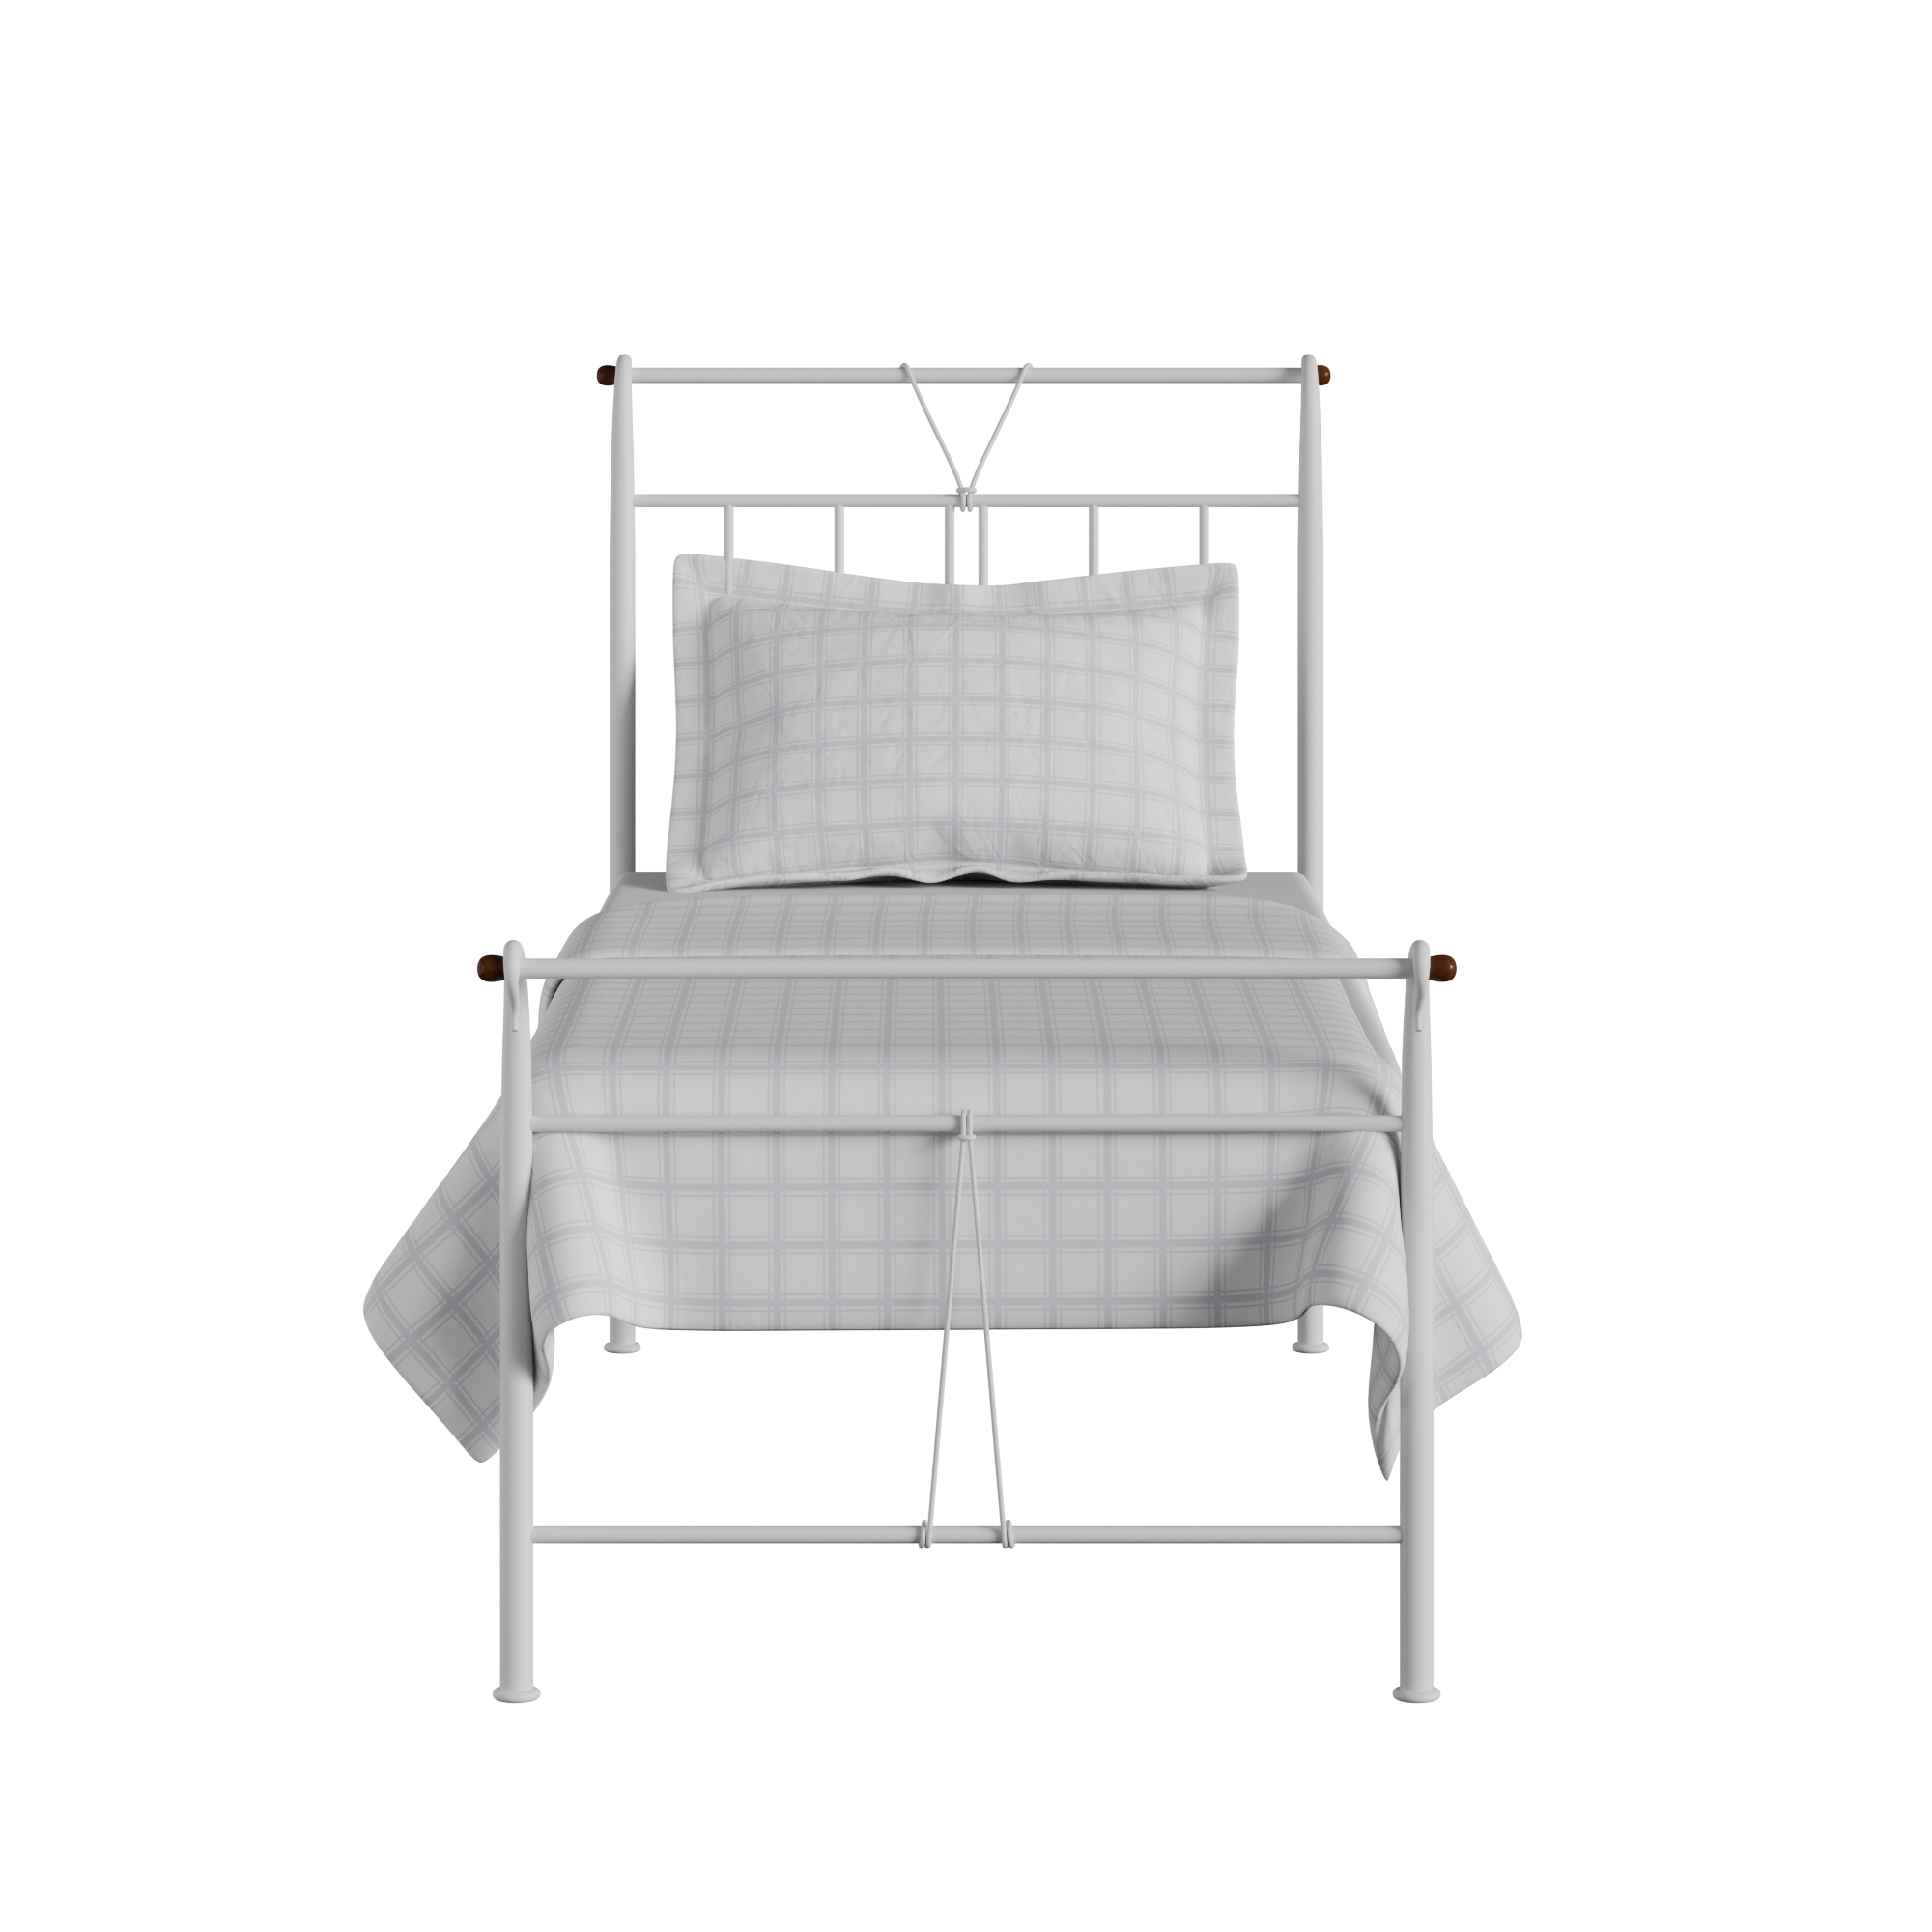 Pellini iron/metal single bed in white